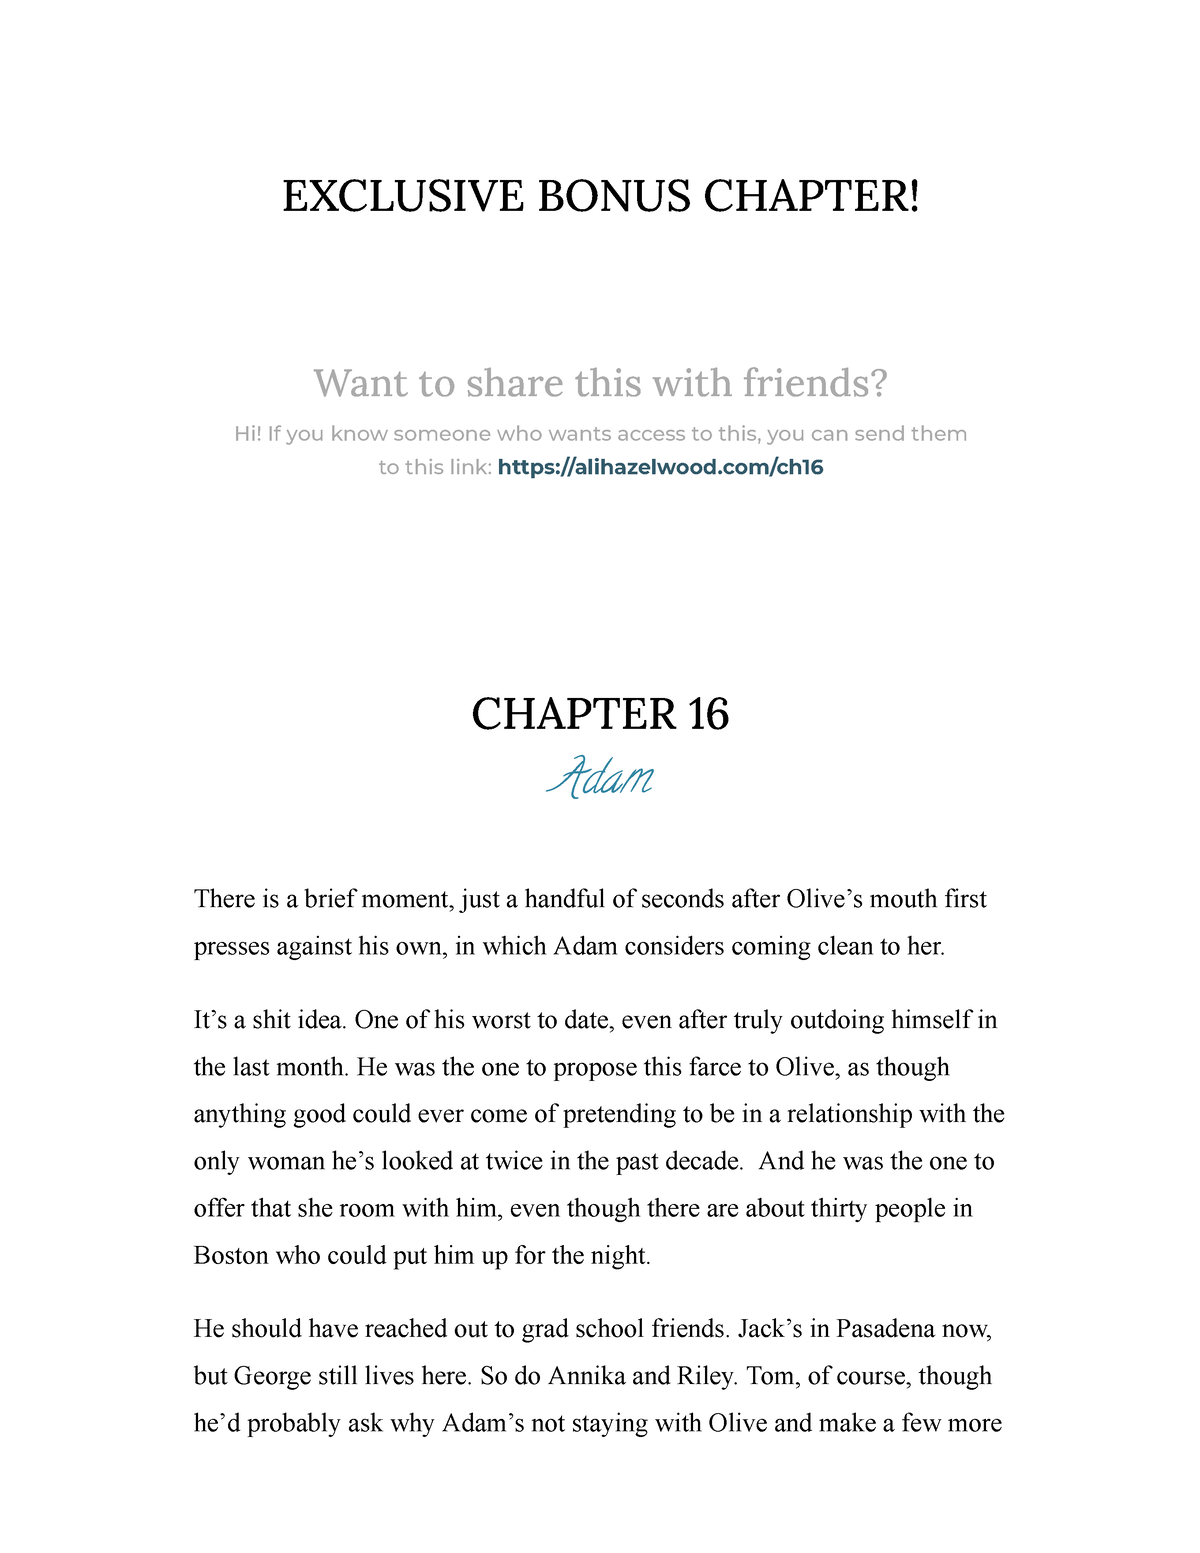 love hypothesis book bonus chapter